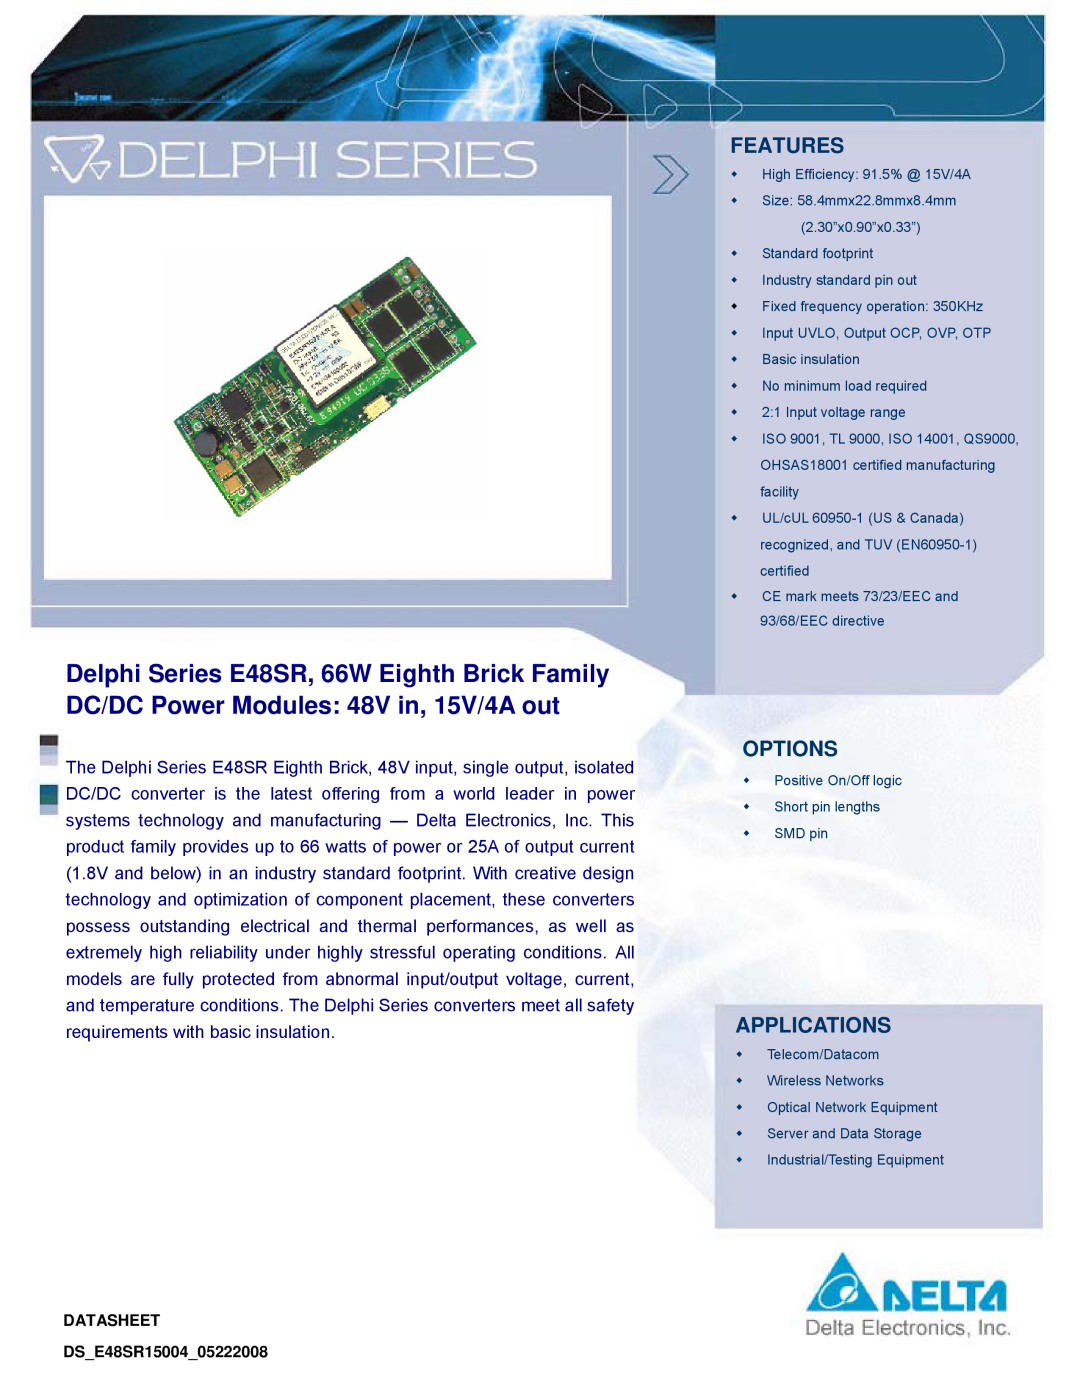 Delta Electronics manual Features, Options, Applications, DATASHEET DSE48SR1500405222008 